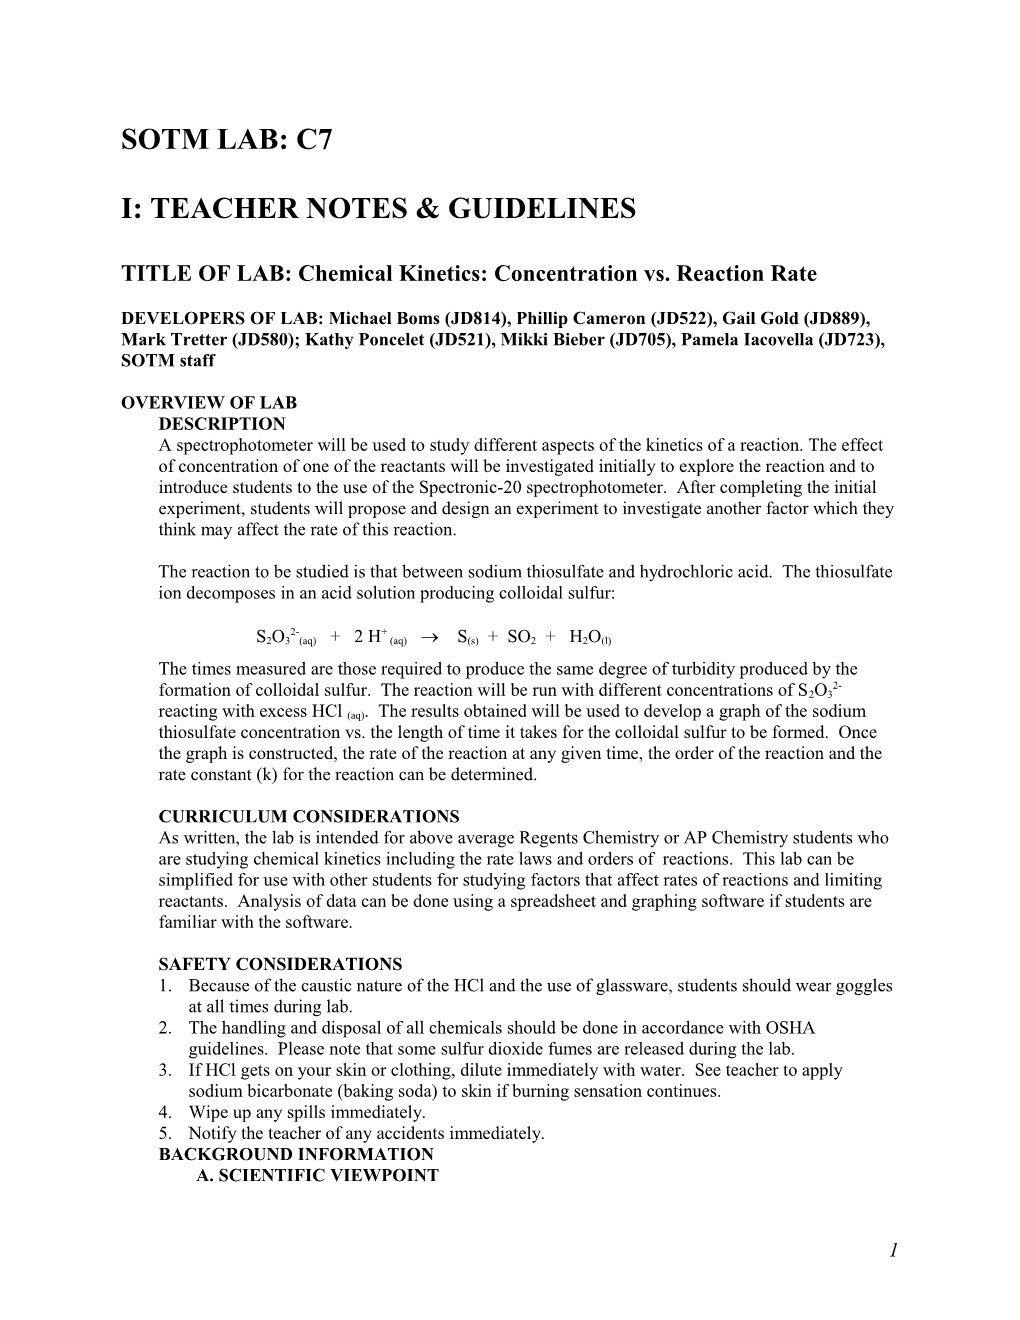 Part I: Teacher’S Notes & Guidelines